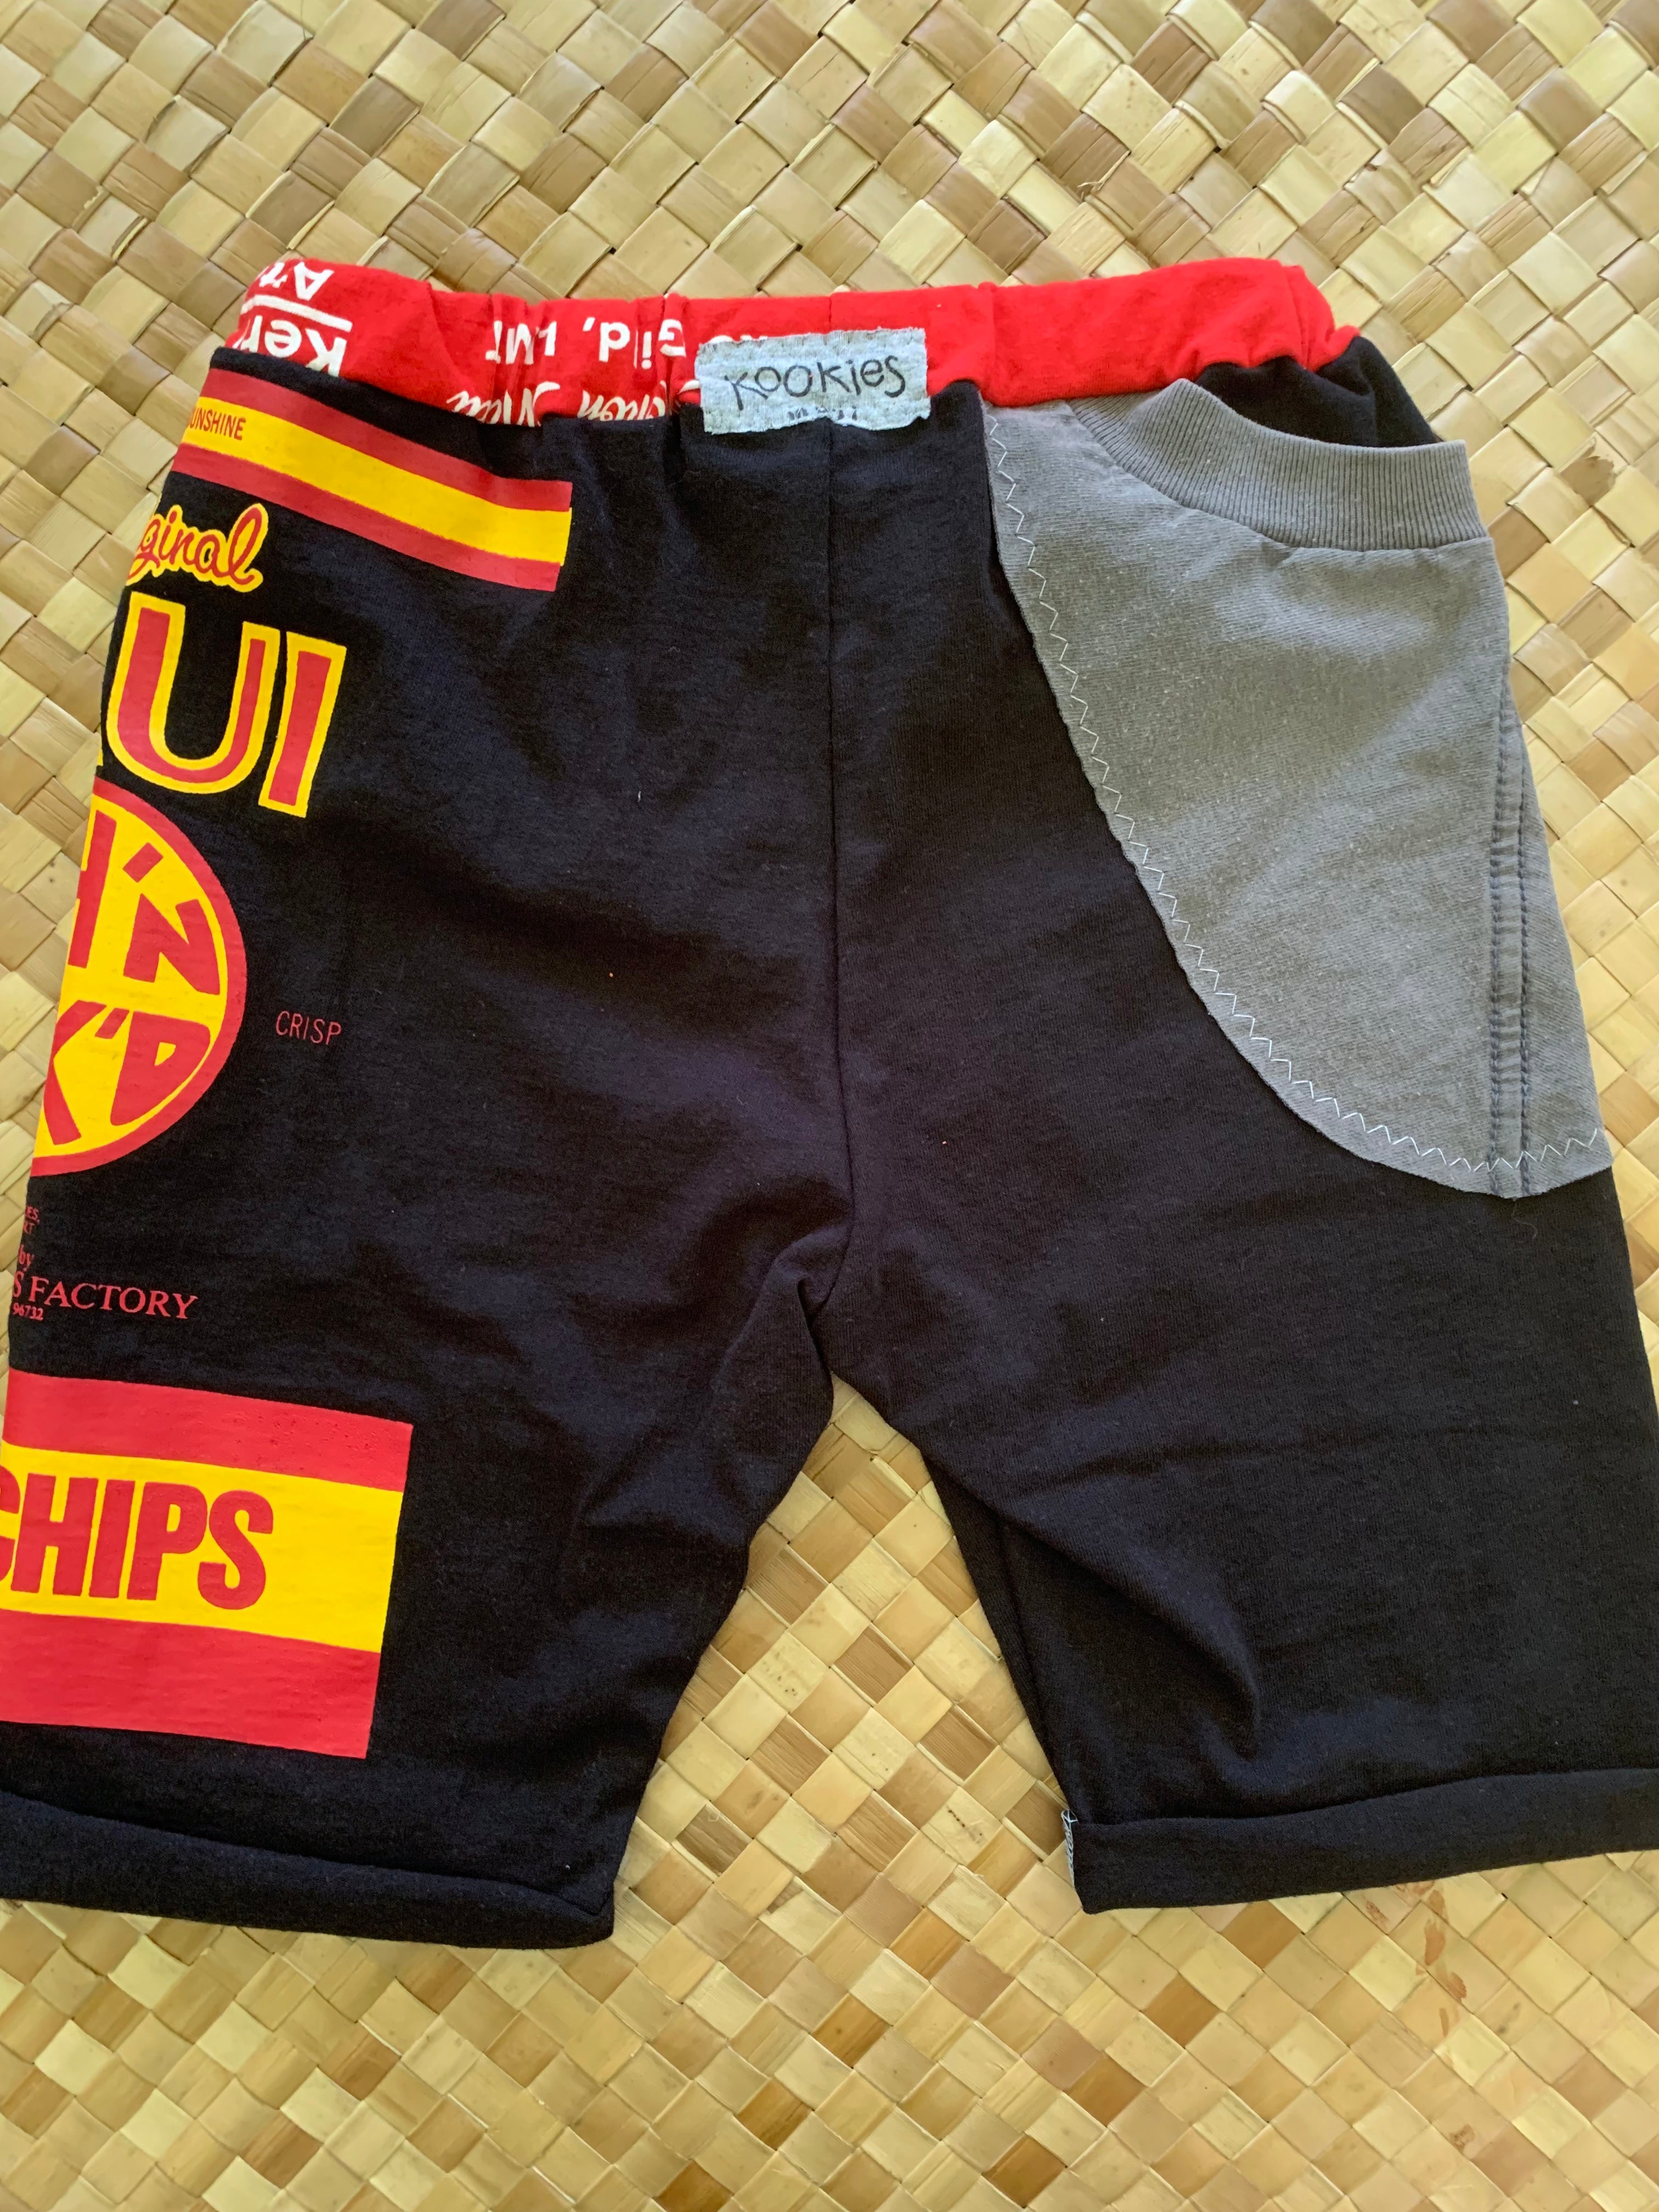 Kids Size 8 "Black & Red Maui Potato Chips" Beach Comber Shorts